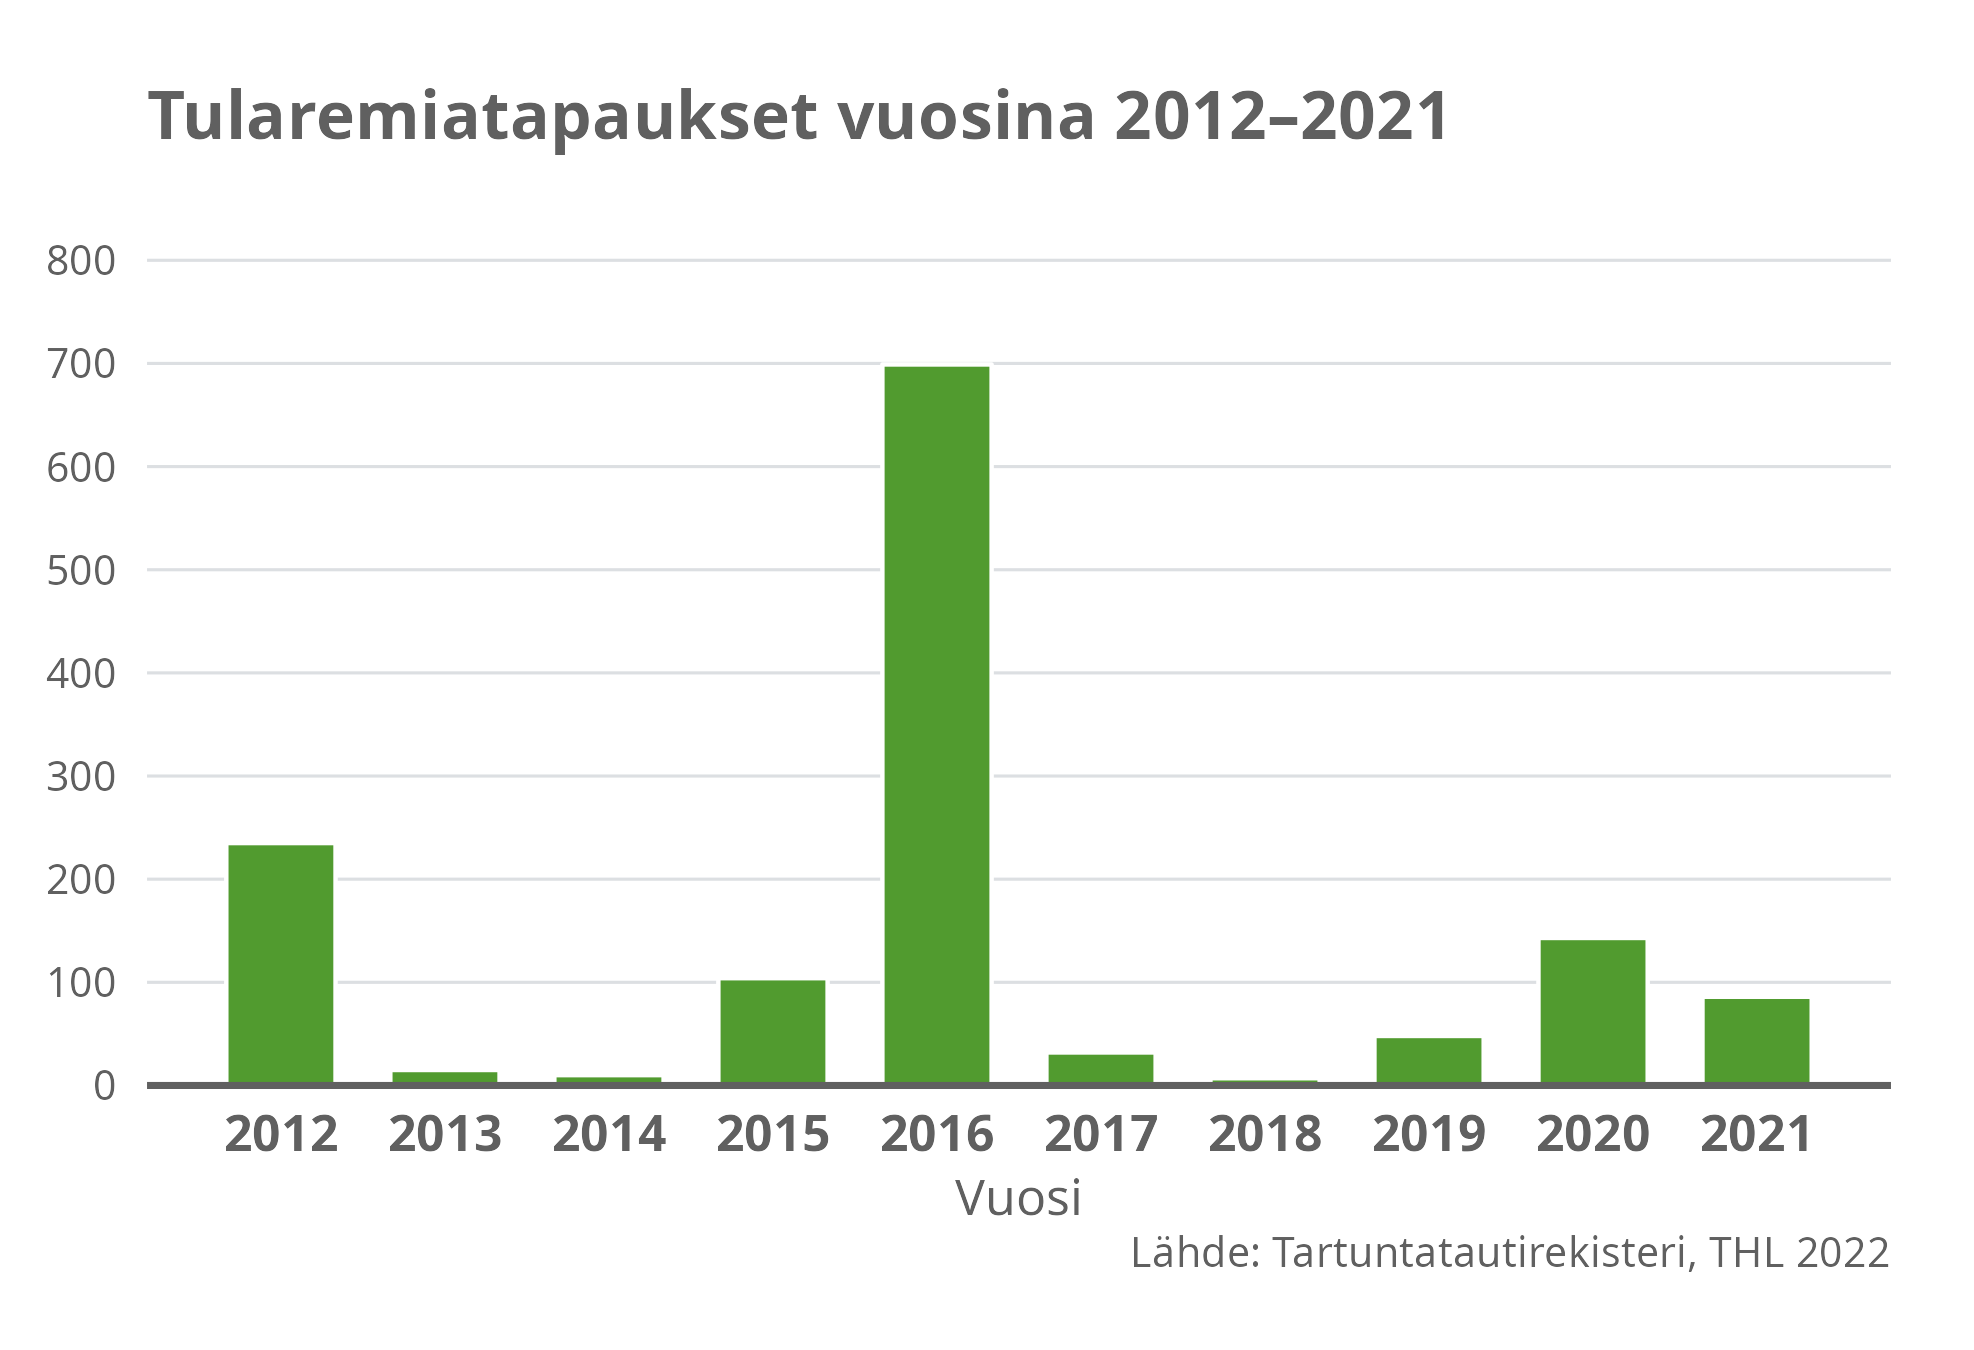 Tularemiatapaukset vuosina 2012-2021.